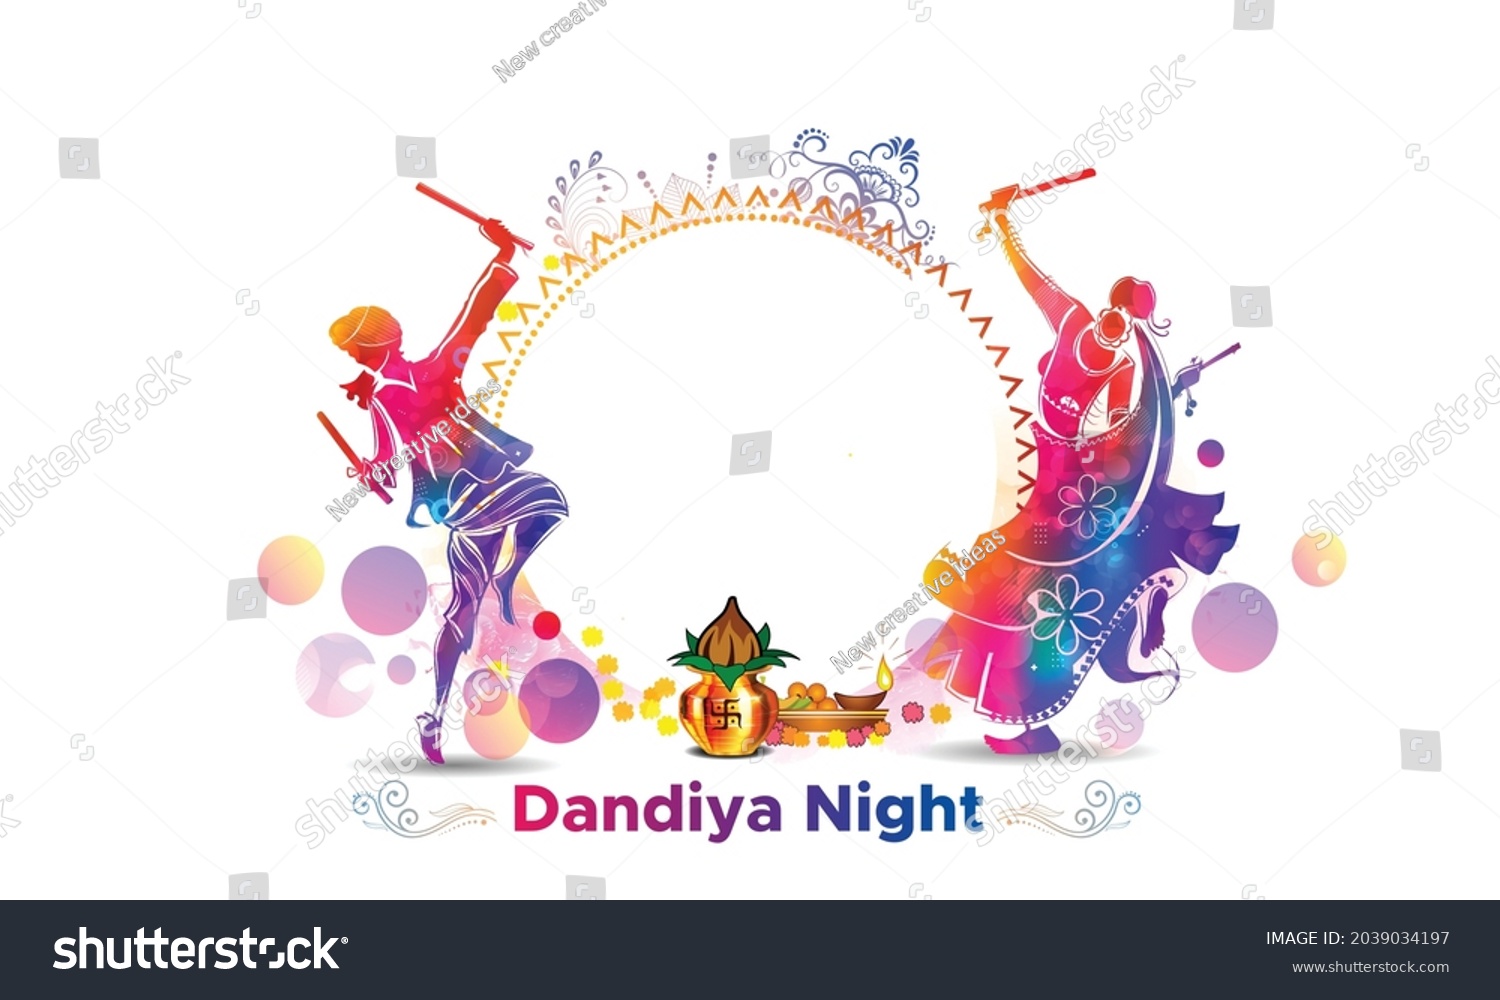 SVG of Dandiya night dance festival background svg